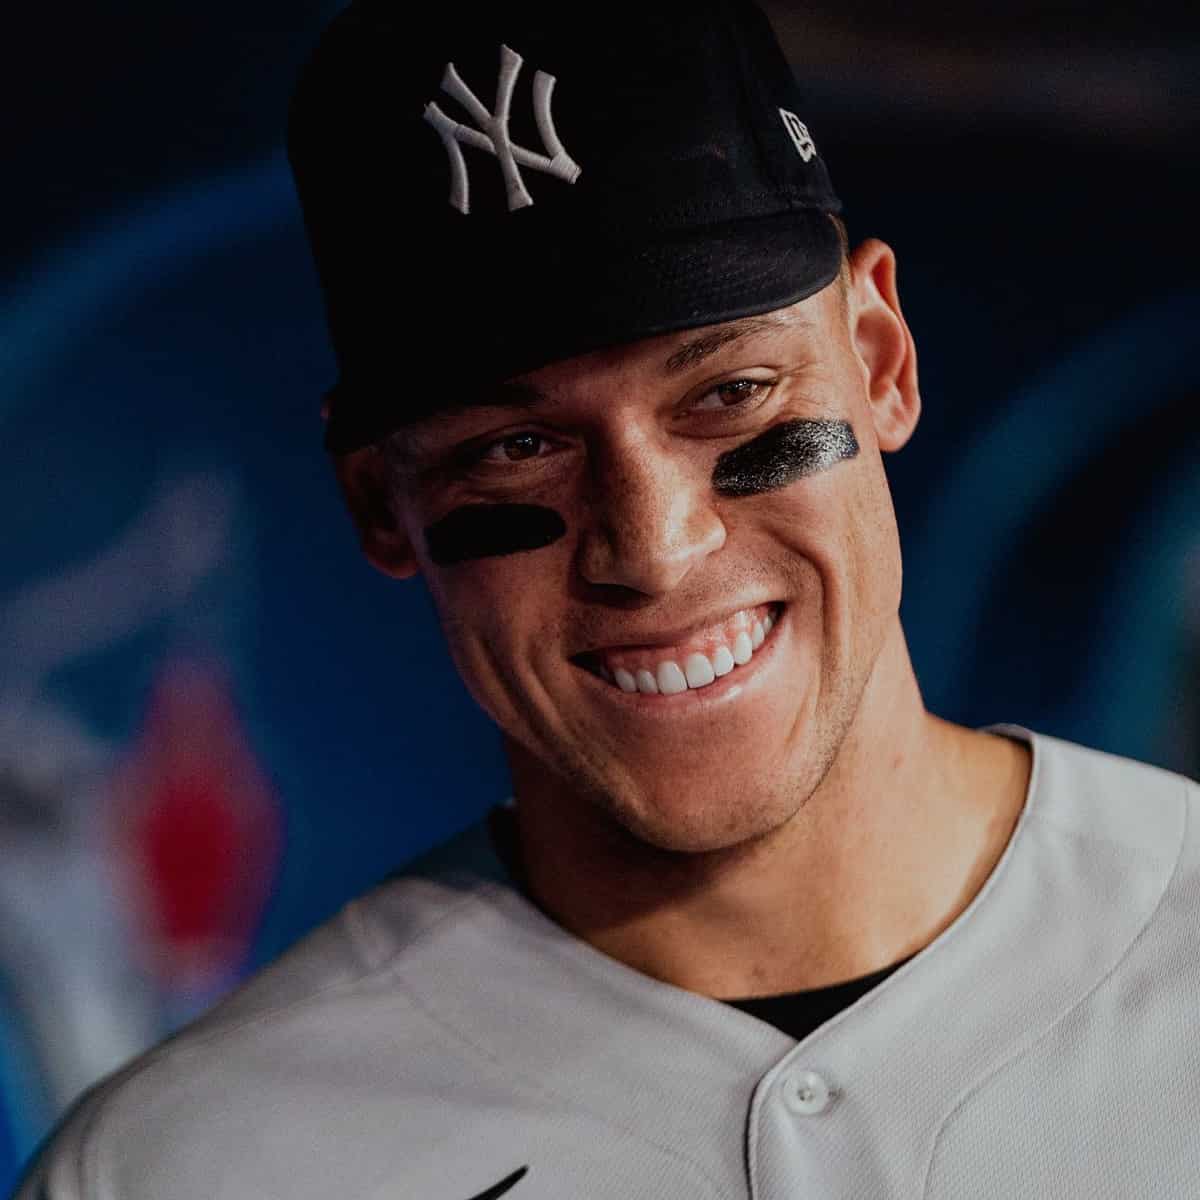 Yankees' Aaron Judge among All-Star vote leaders in AL outfield - Pinstripe  Alley